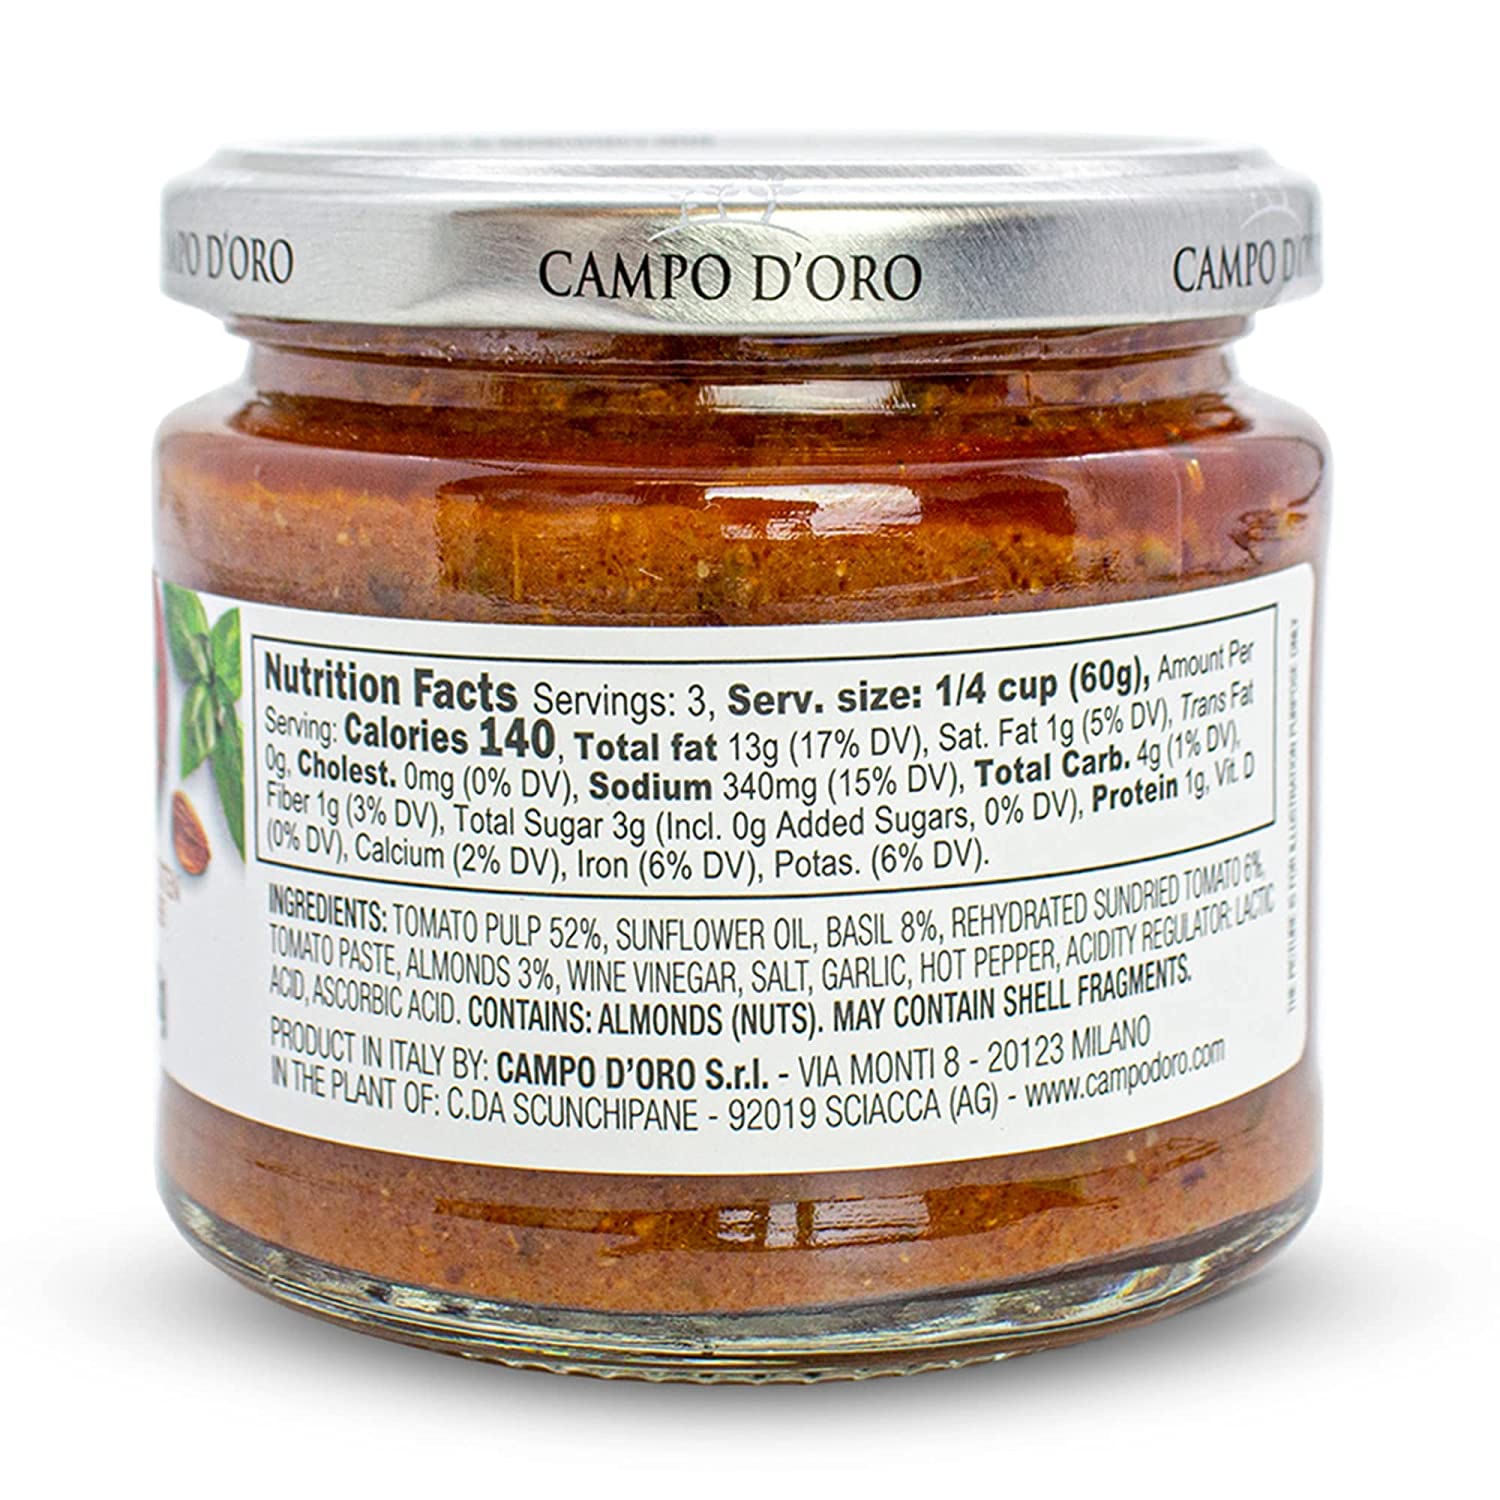 Campo D'Oro, Trapanese Pesto Sauce, made with Tomato Sauce, Basil & Almonds. Italian Specialties.